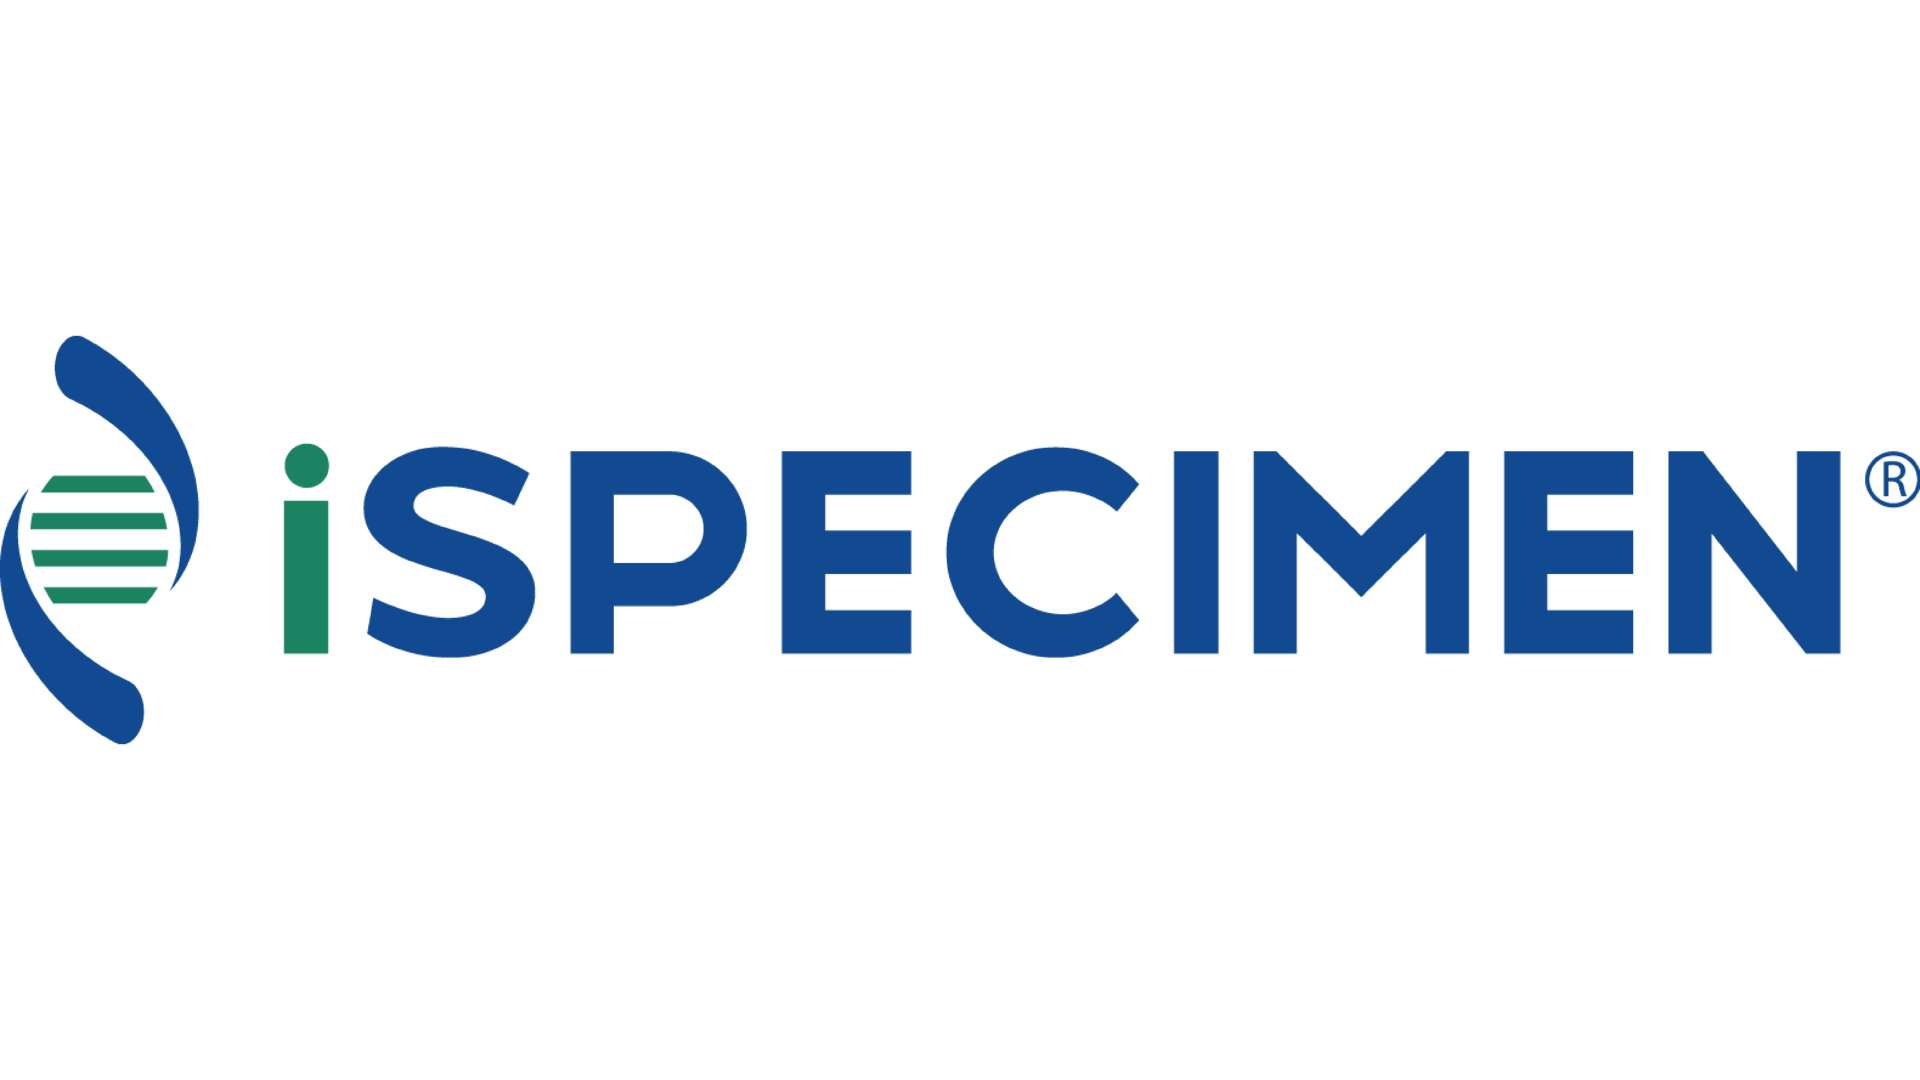 iSpecimen Logo